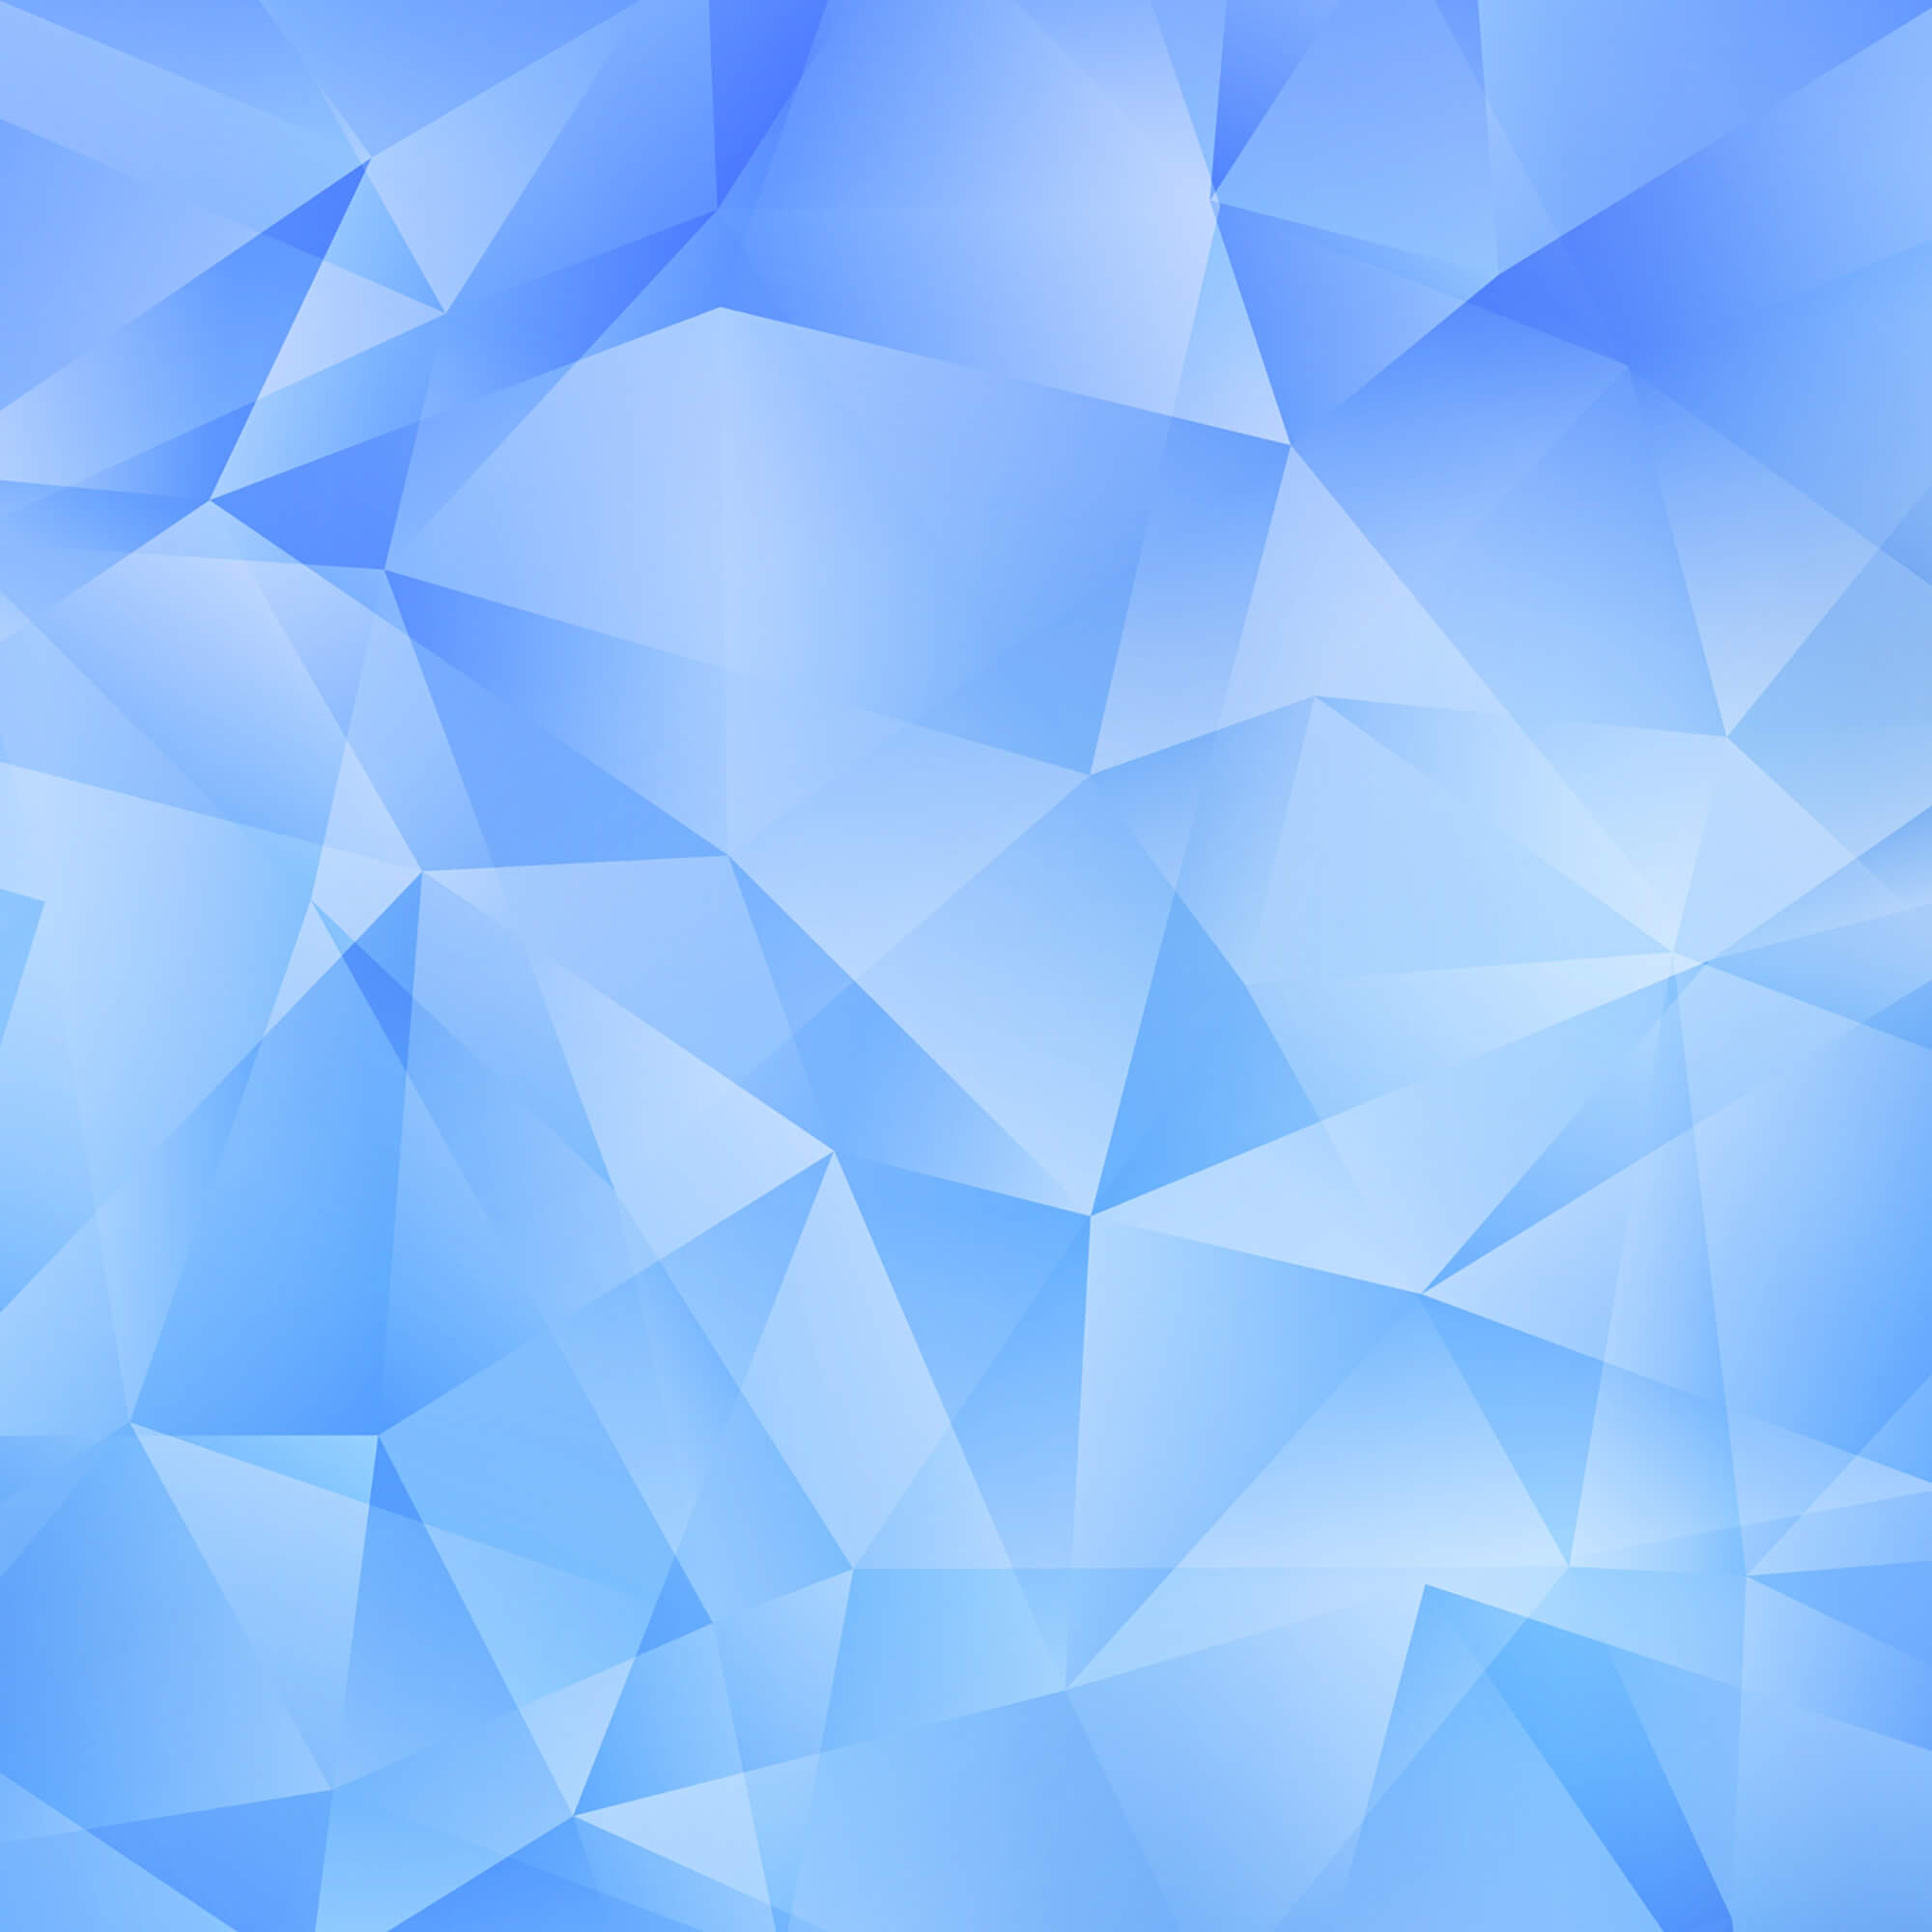 50+] Solid Blue Background Wallpaper - WallpaperSafari